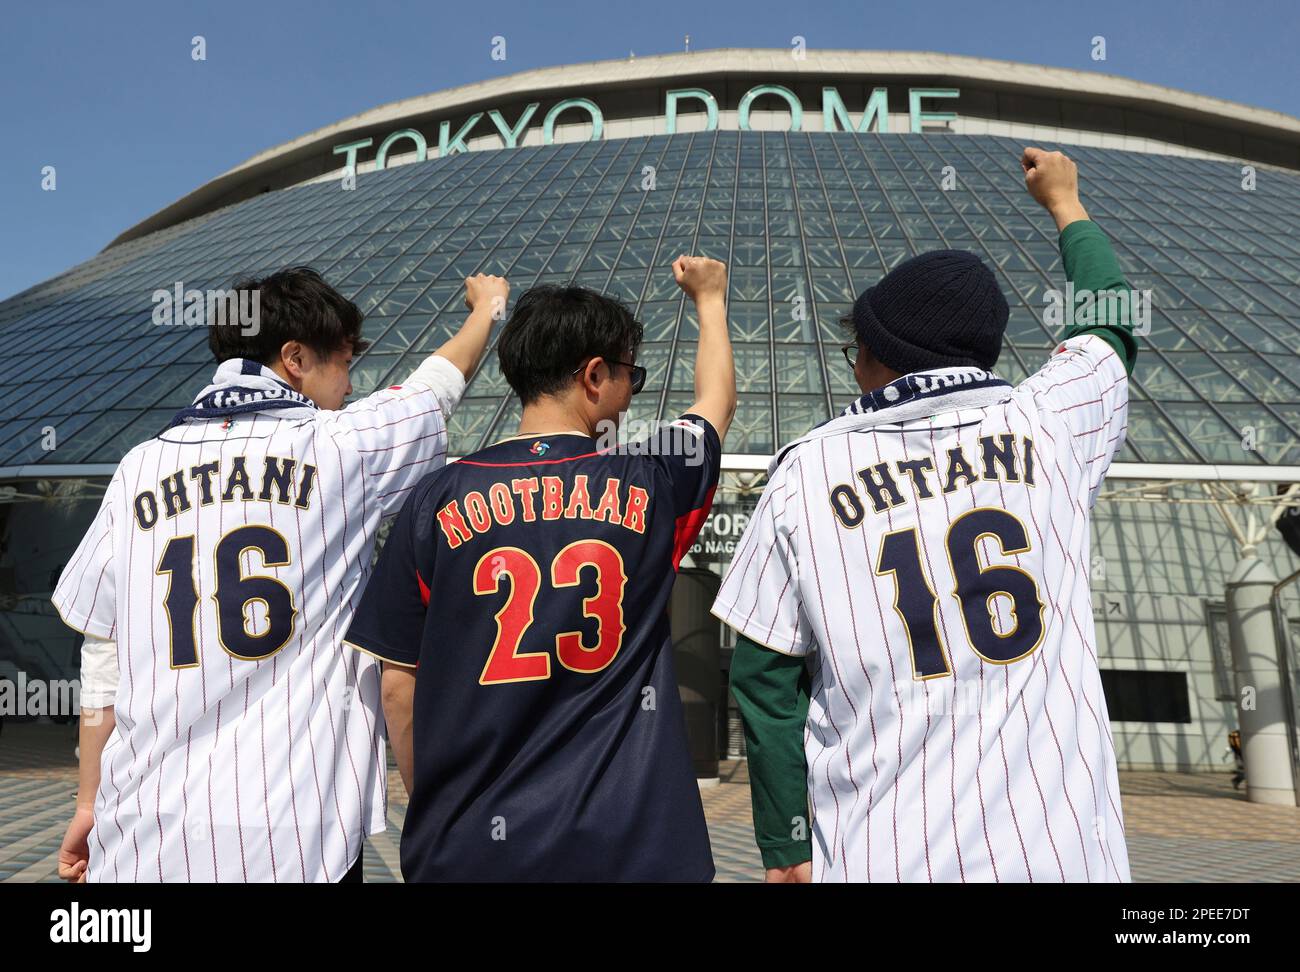 Baseball fans wearing Japan national team uniform such as Shohei